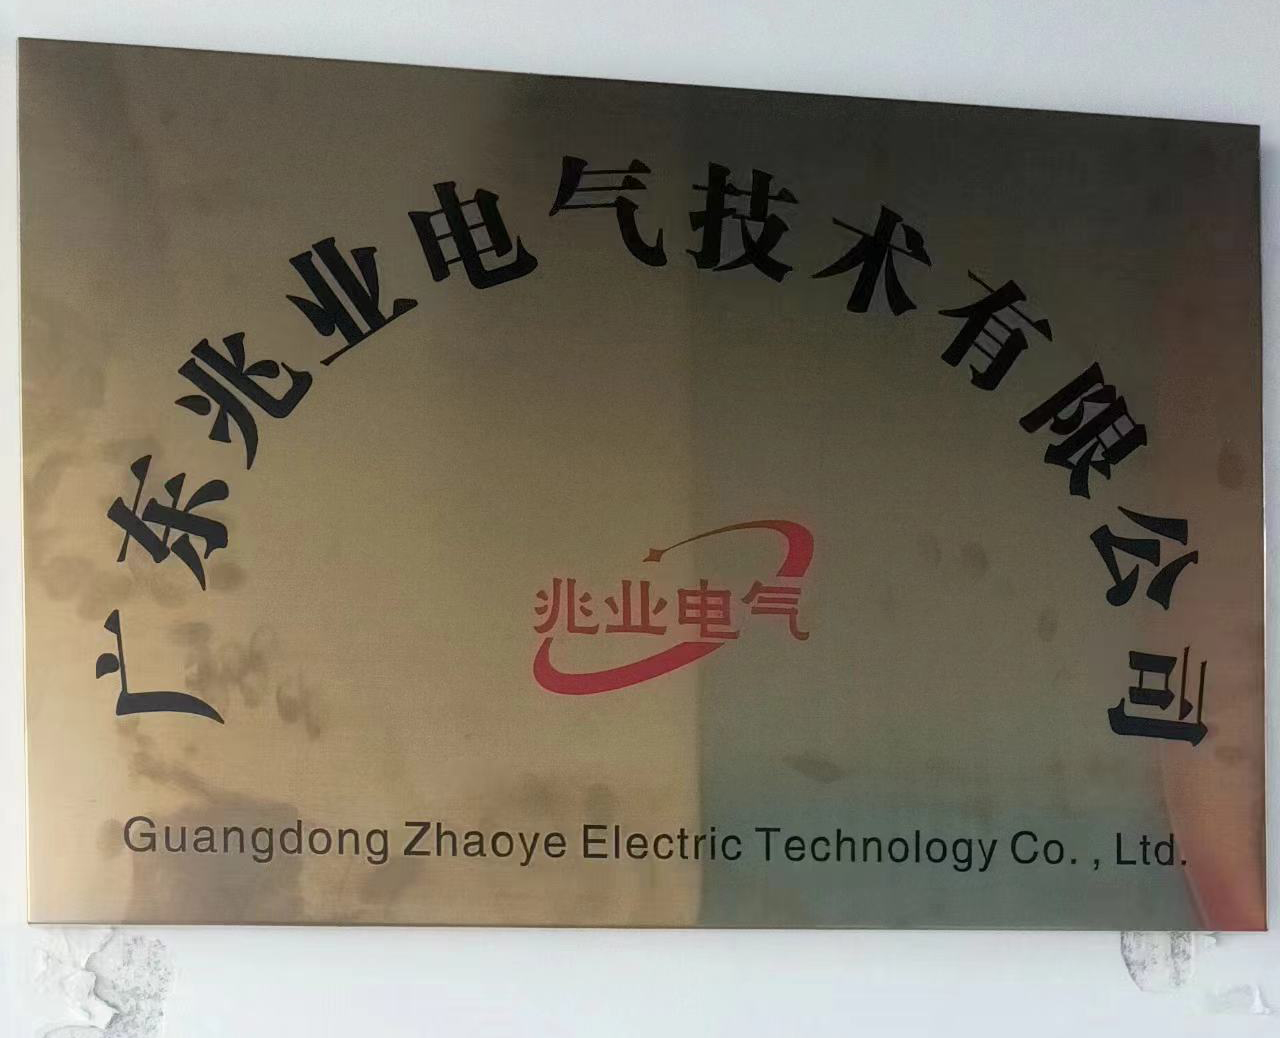 Guangdong Zhaoye Electric Technology Co., Ltd.